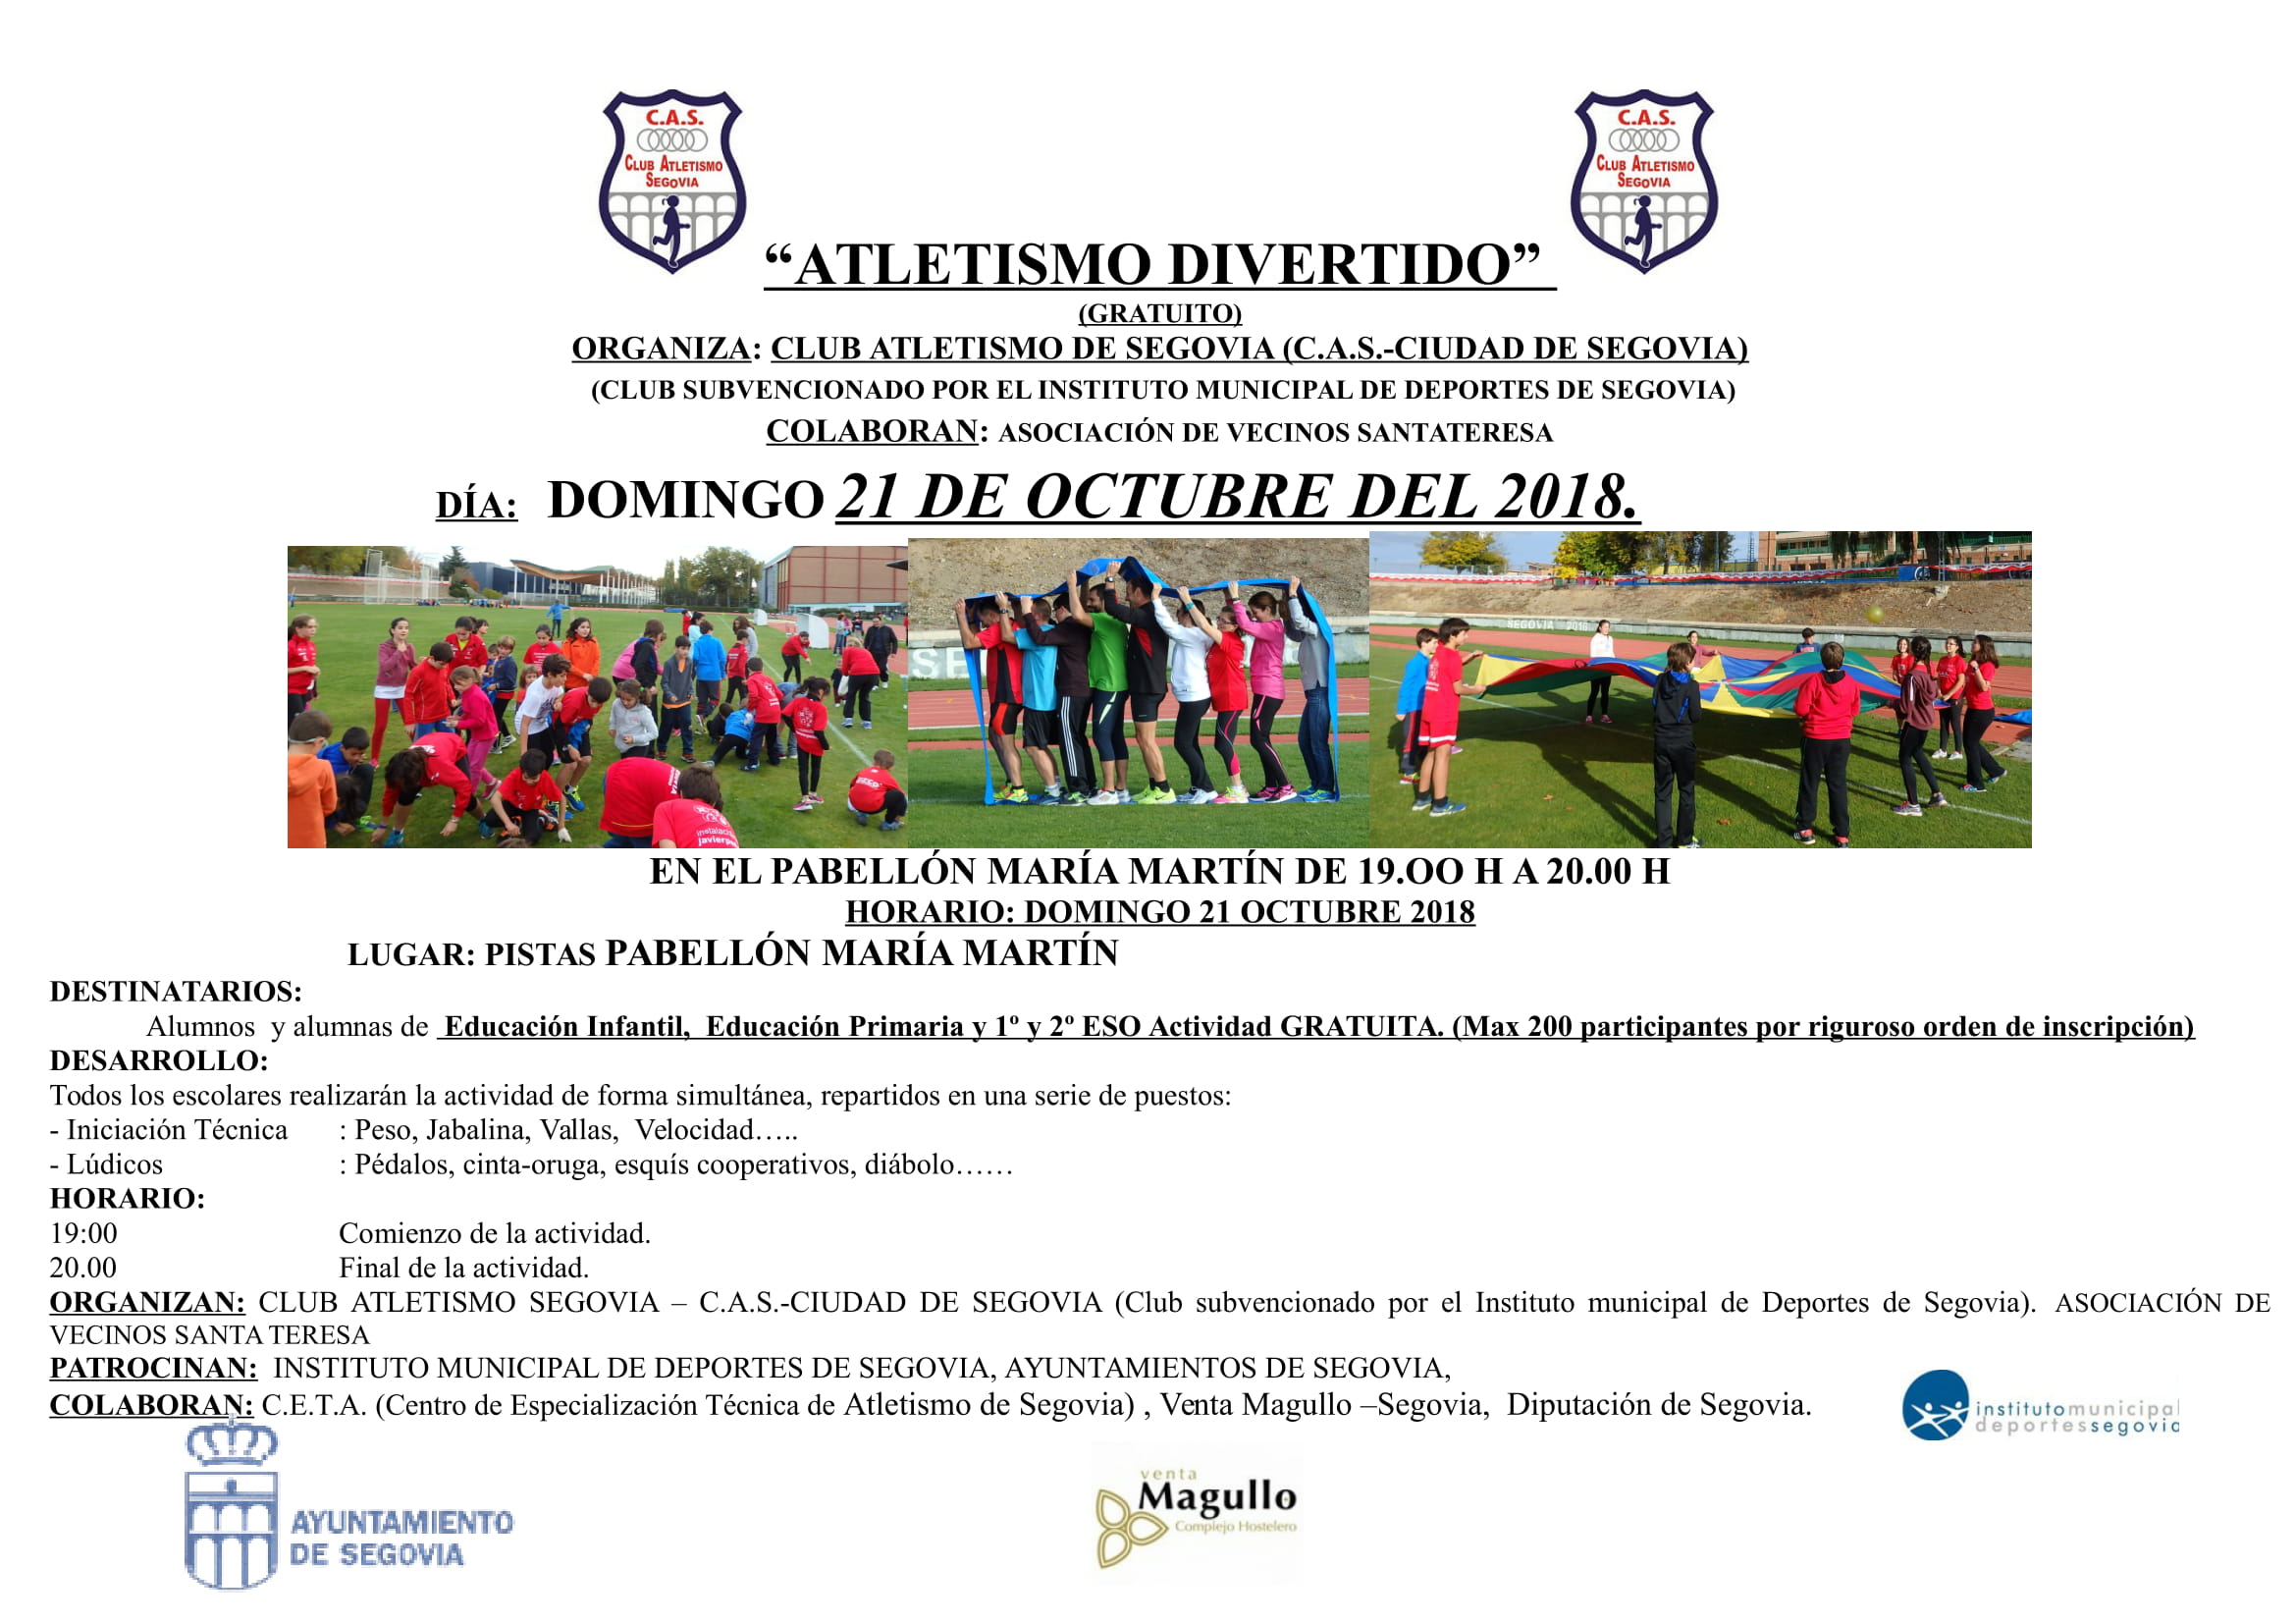 Club de Atletismo Segovia: “Atletismo Divertido”